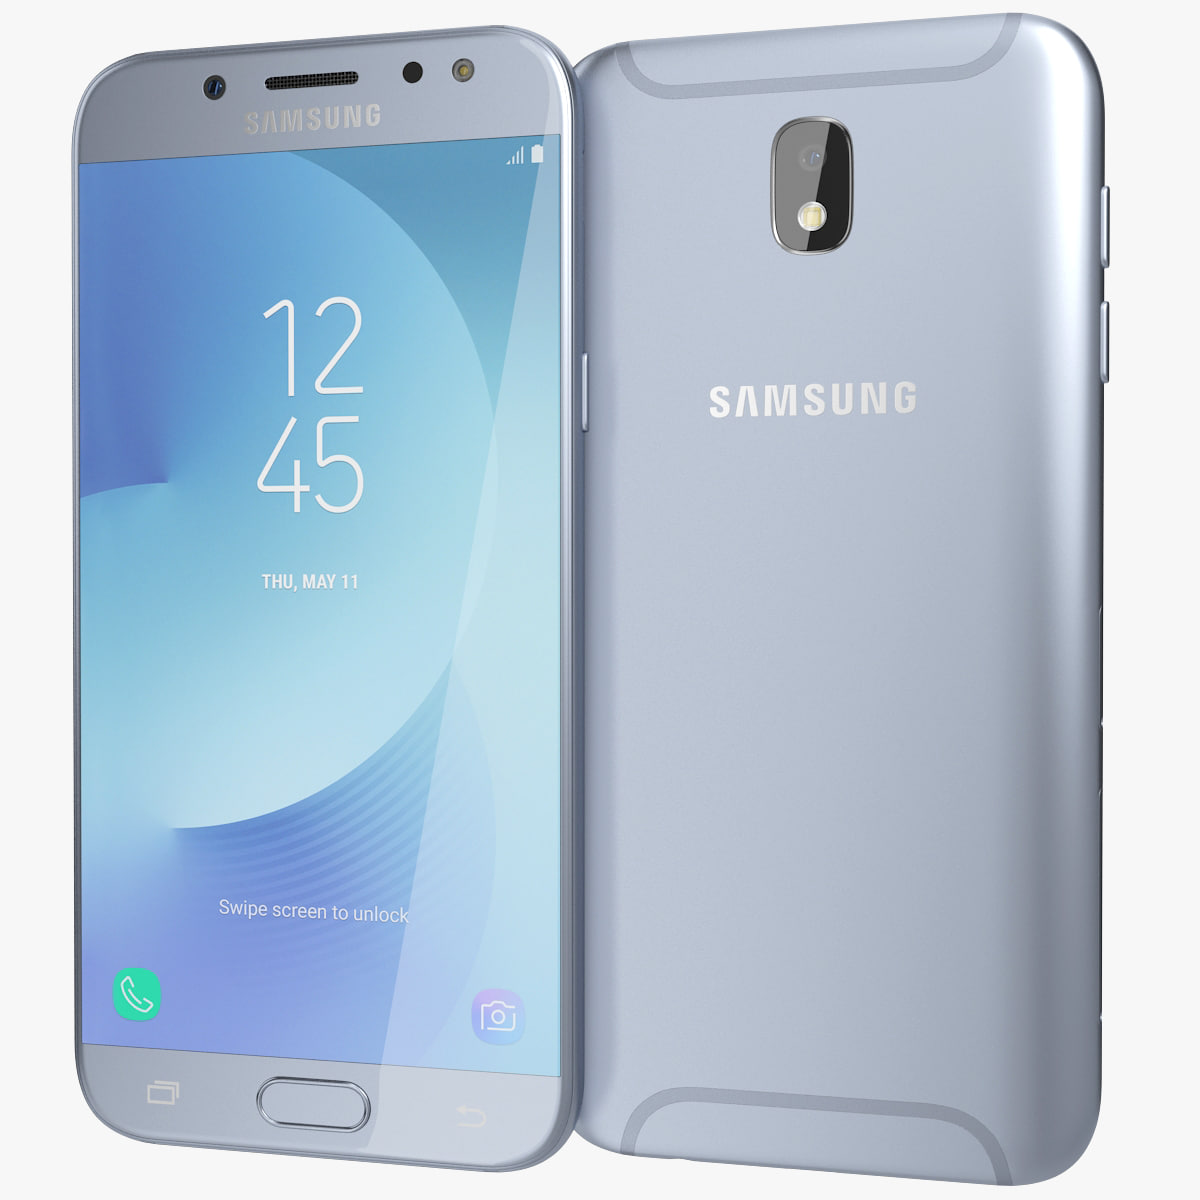 Джи 5 экран. Samsung Galaxy j5 2017. Samsung Galaxy j5. Samsung Galaxy j5 2017 Samsung. Смартфон Samsung Galaxy j3 (2017).